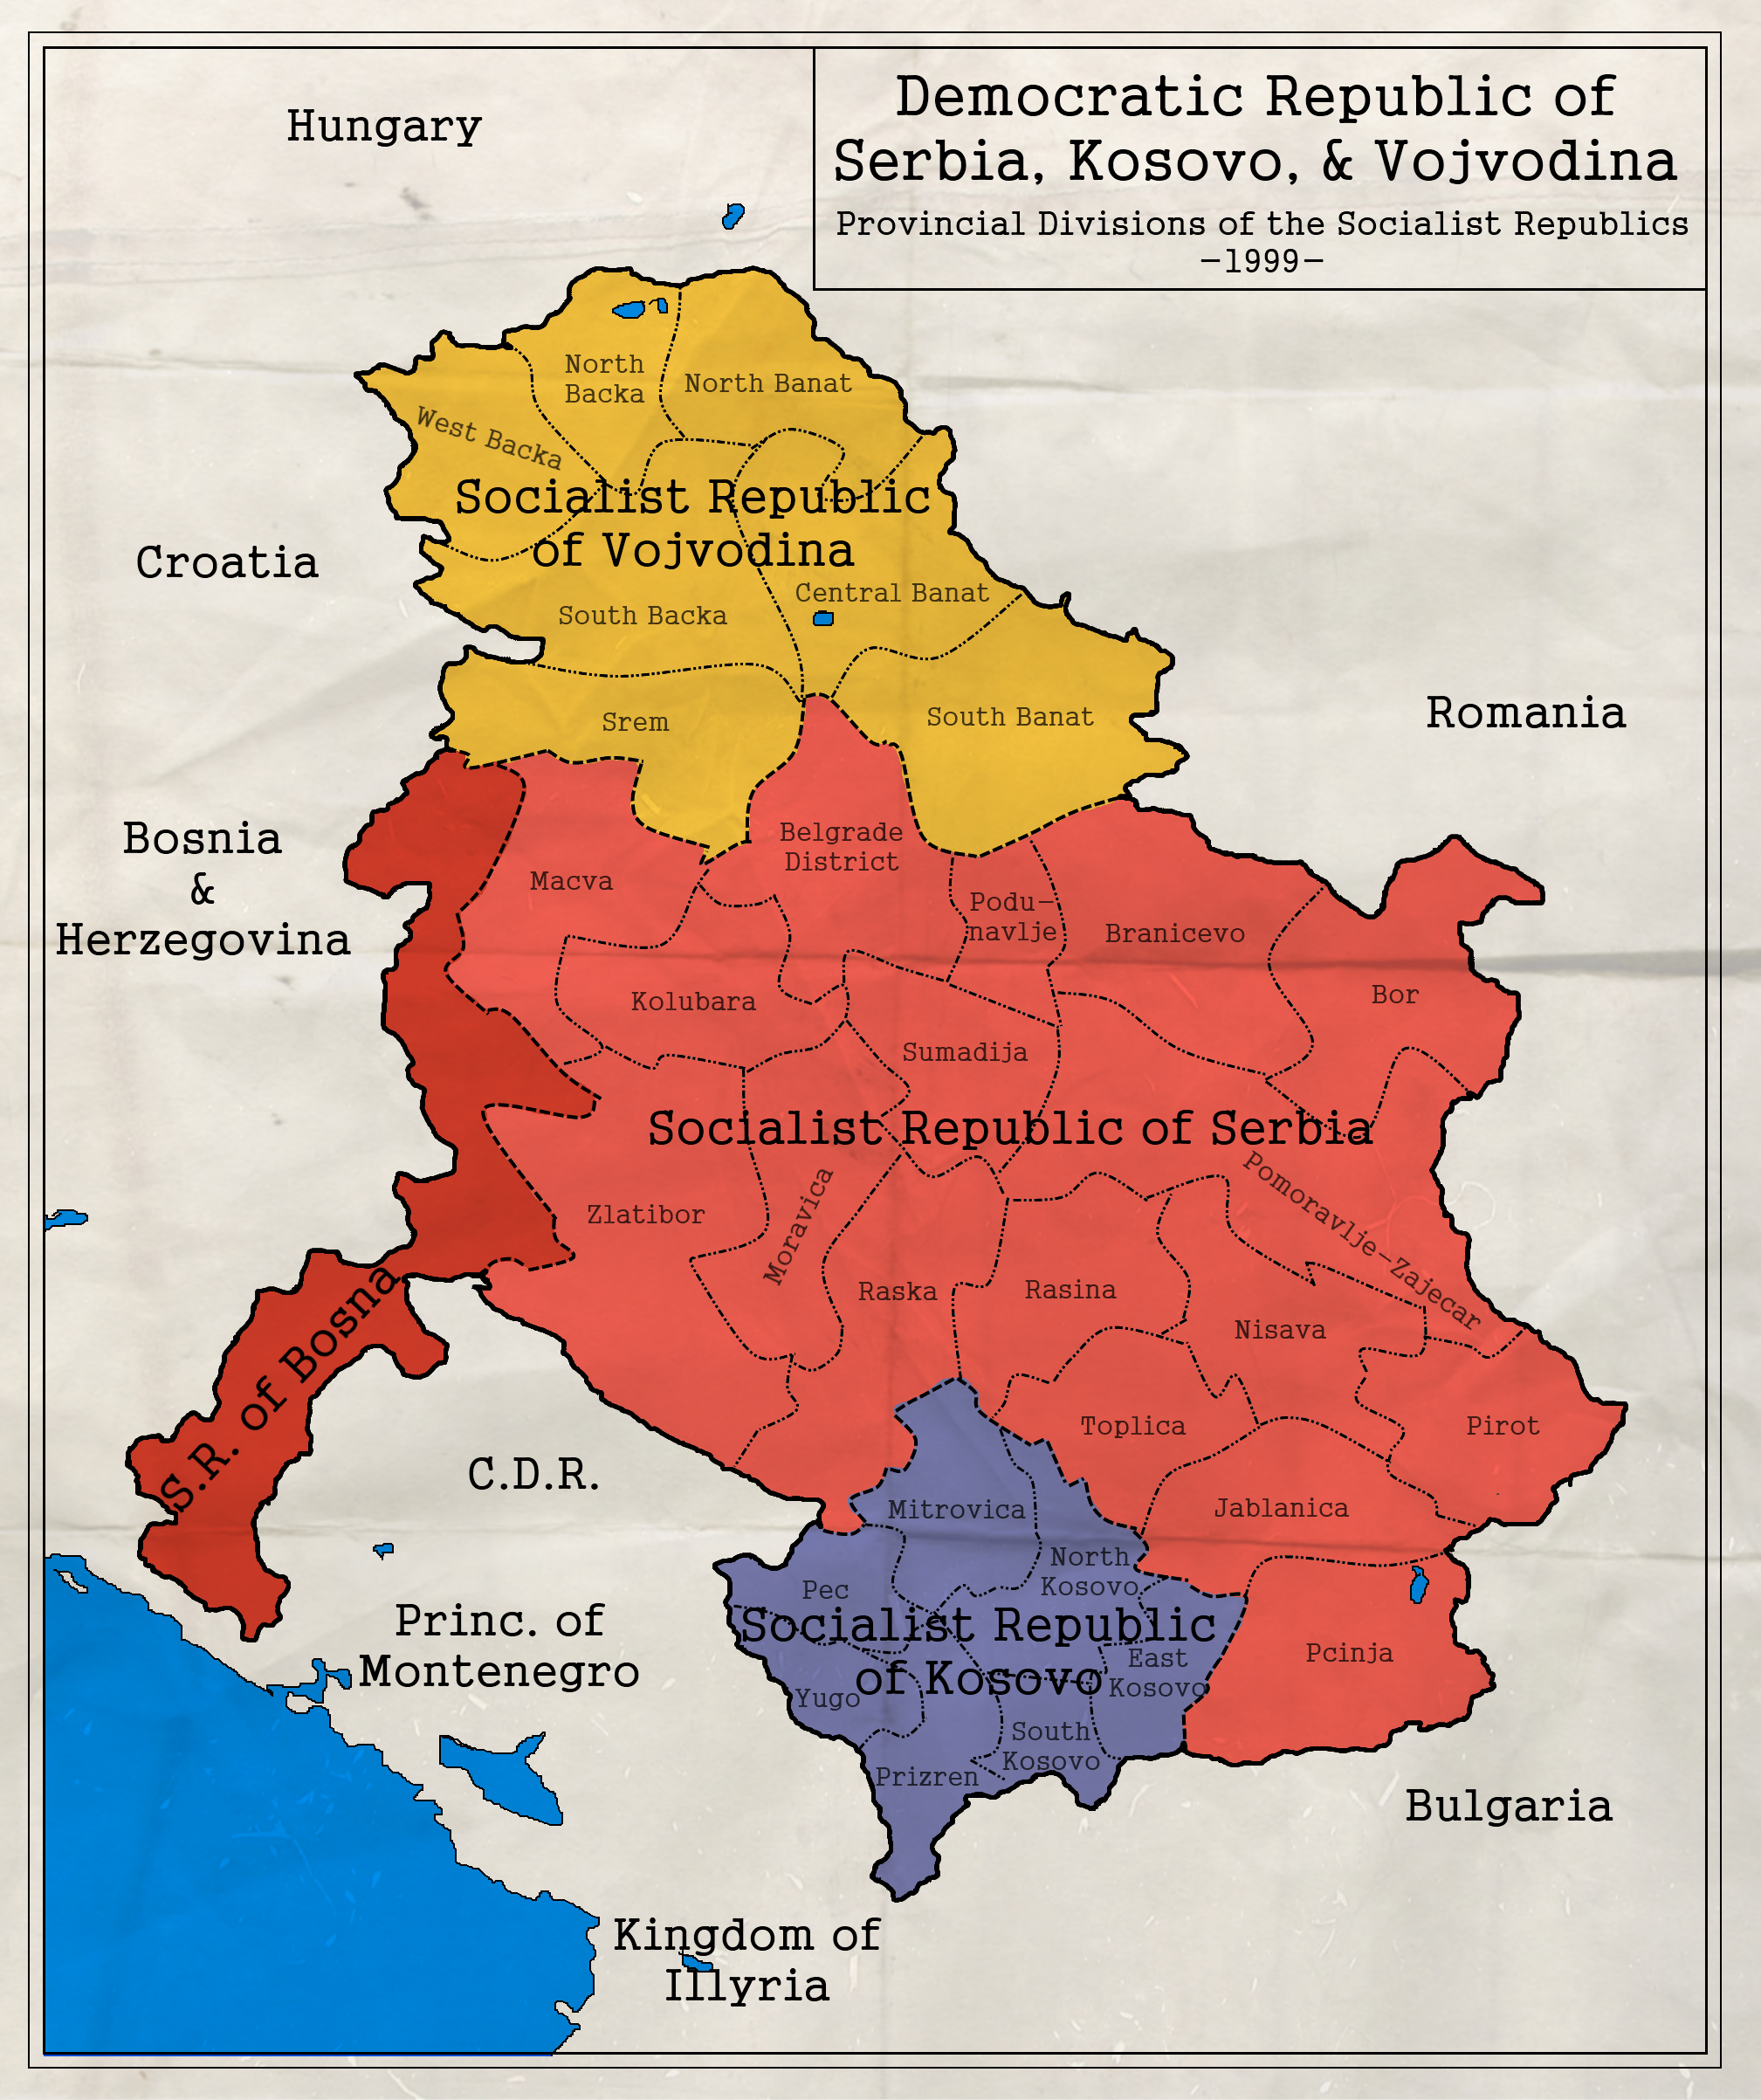 Democratic Republic of Serbia, Kosovo, i Vojvodina by zalezsky on